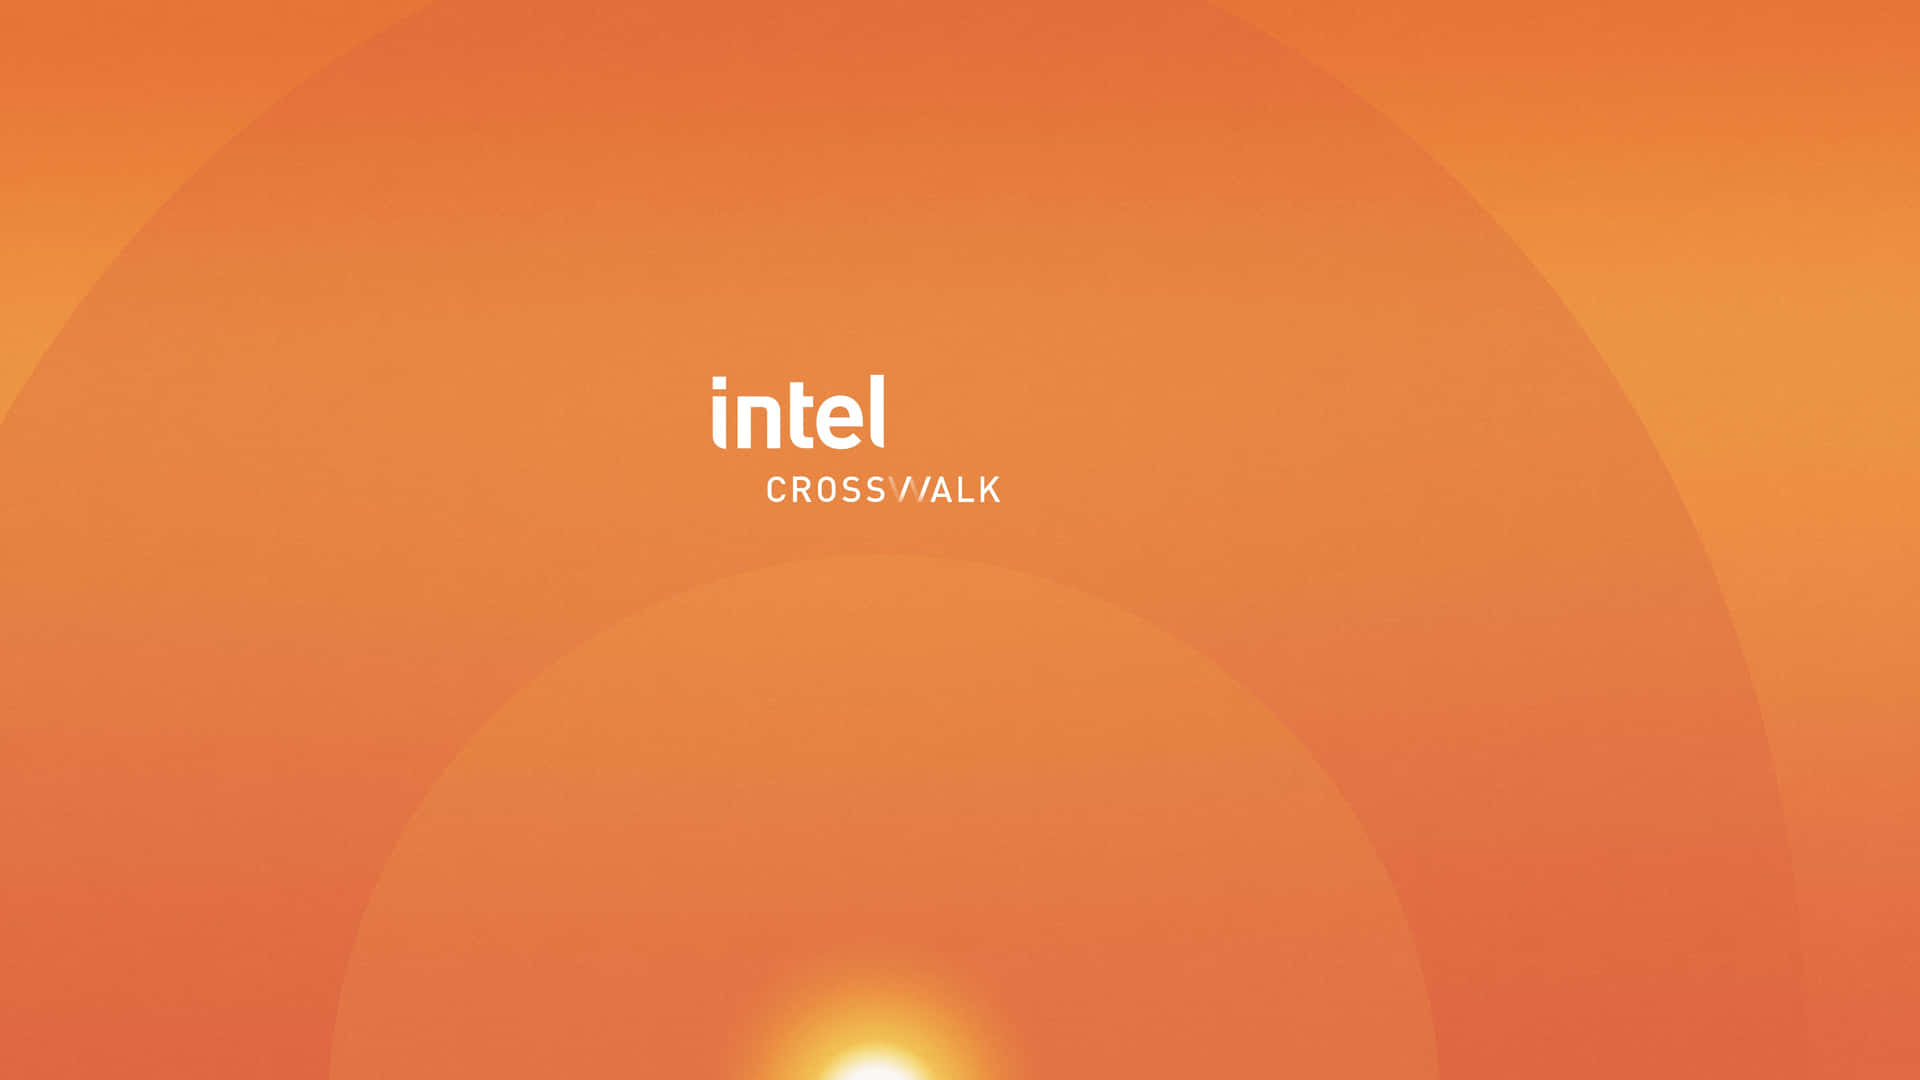 Intel Cross Talk Feature Graphic Wallpaper